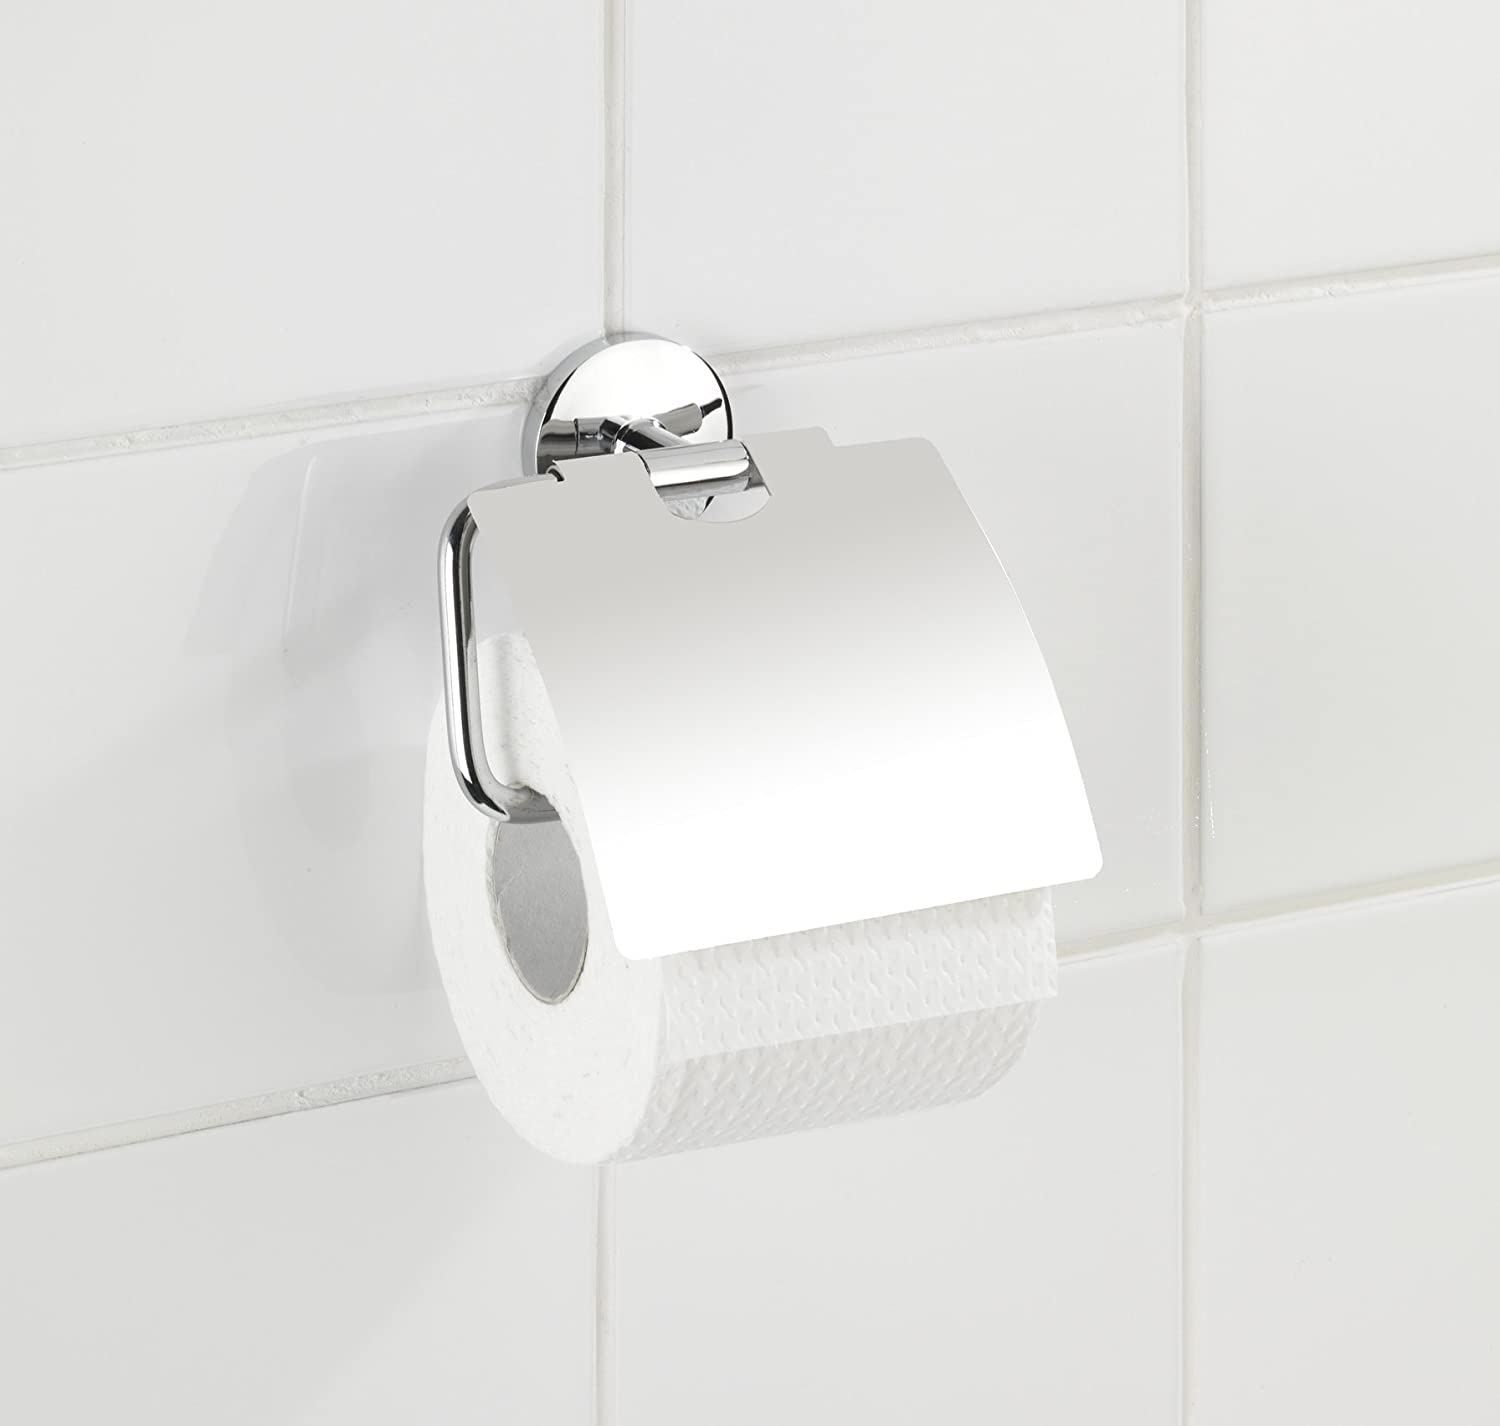 Toilettenpapierrollenhalter Cuba Glänzend - WC-Rollenhalter, mit Deckel, Zinkdruckguss, 13.5 x 13.5 x 4 cm, Chrom